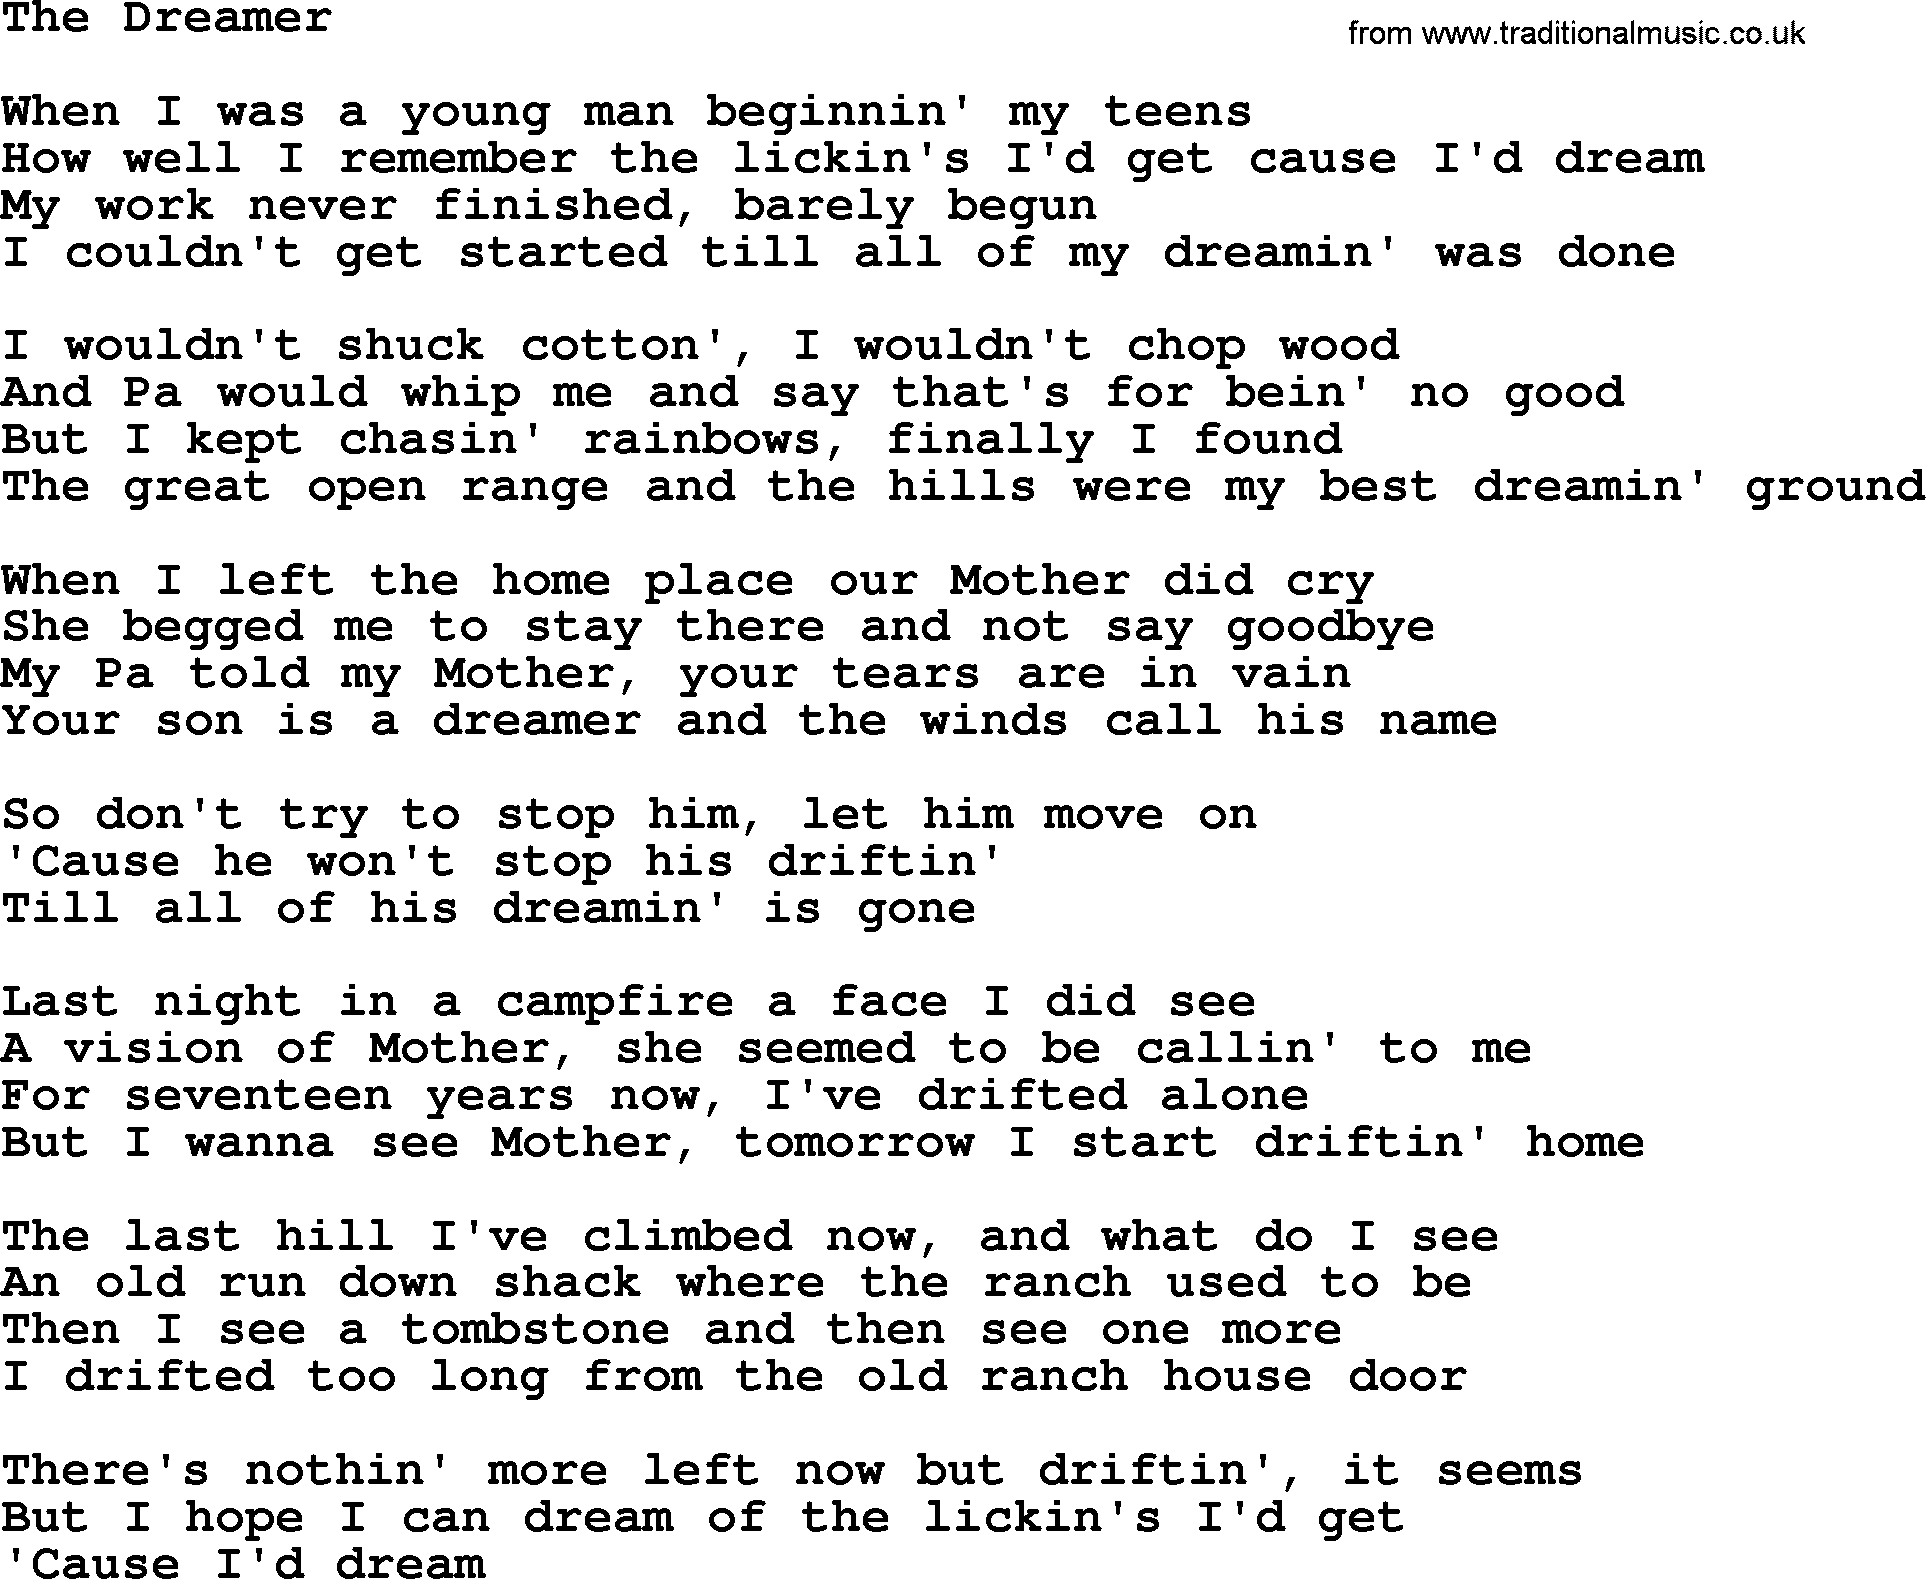 Marty Robbins song: The Dreamer, lyrics